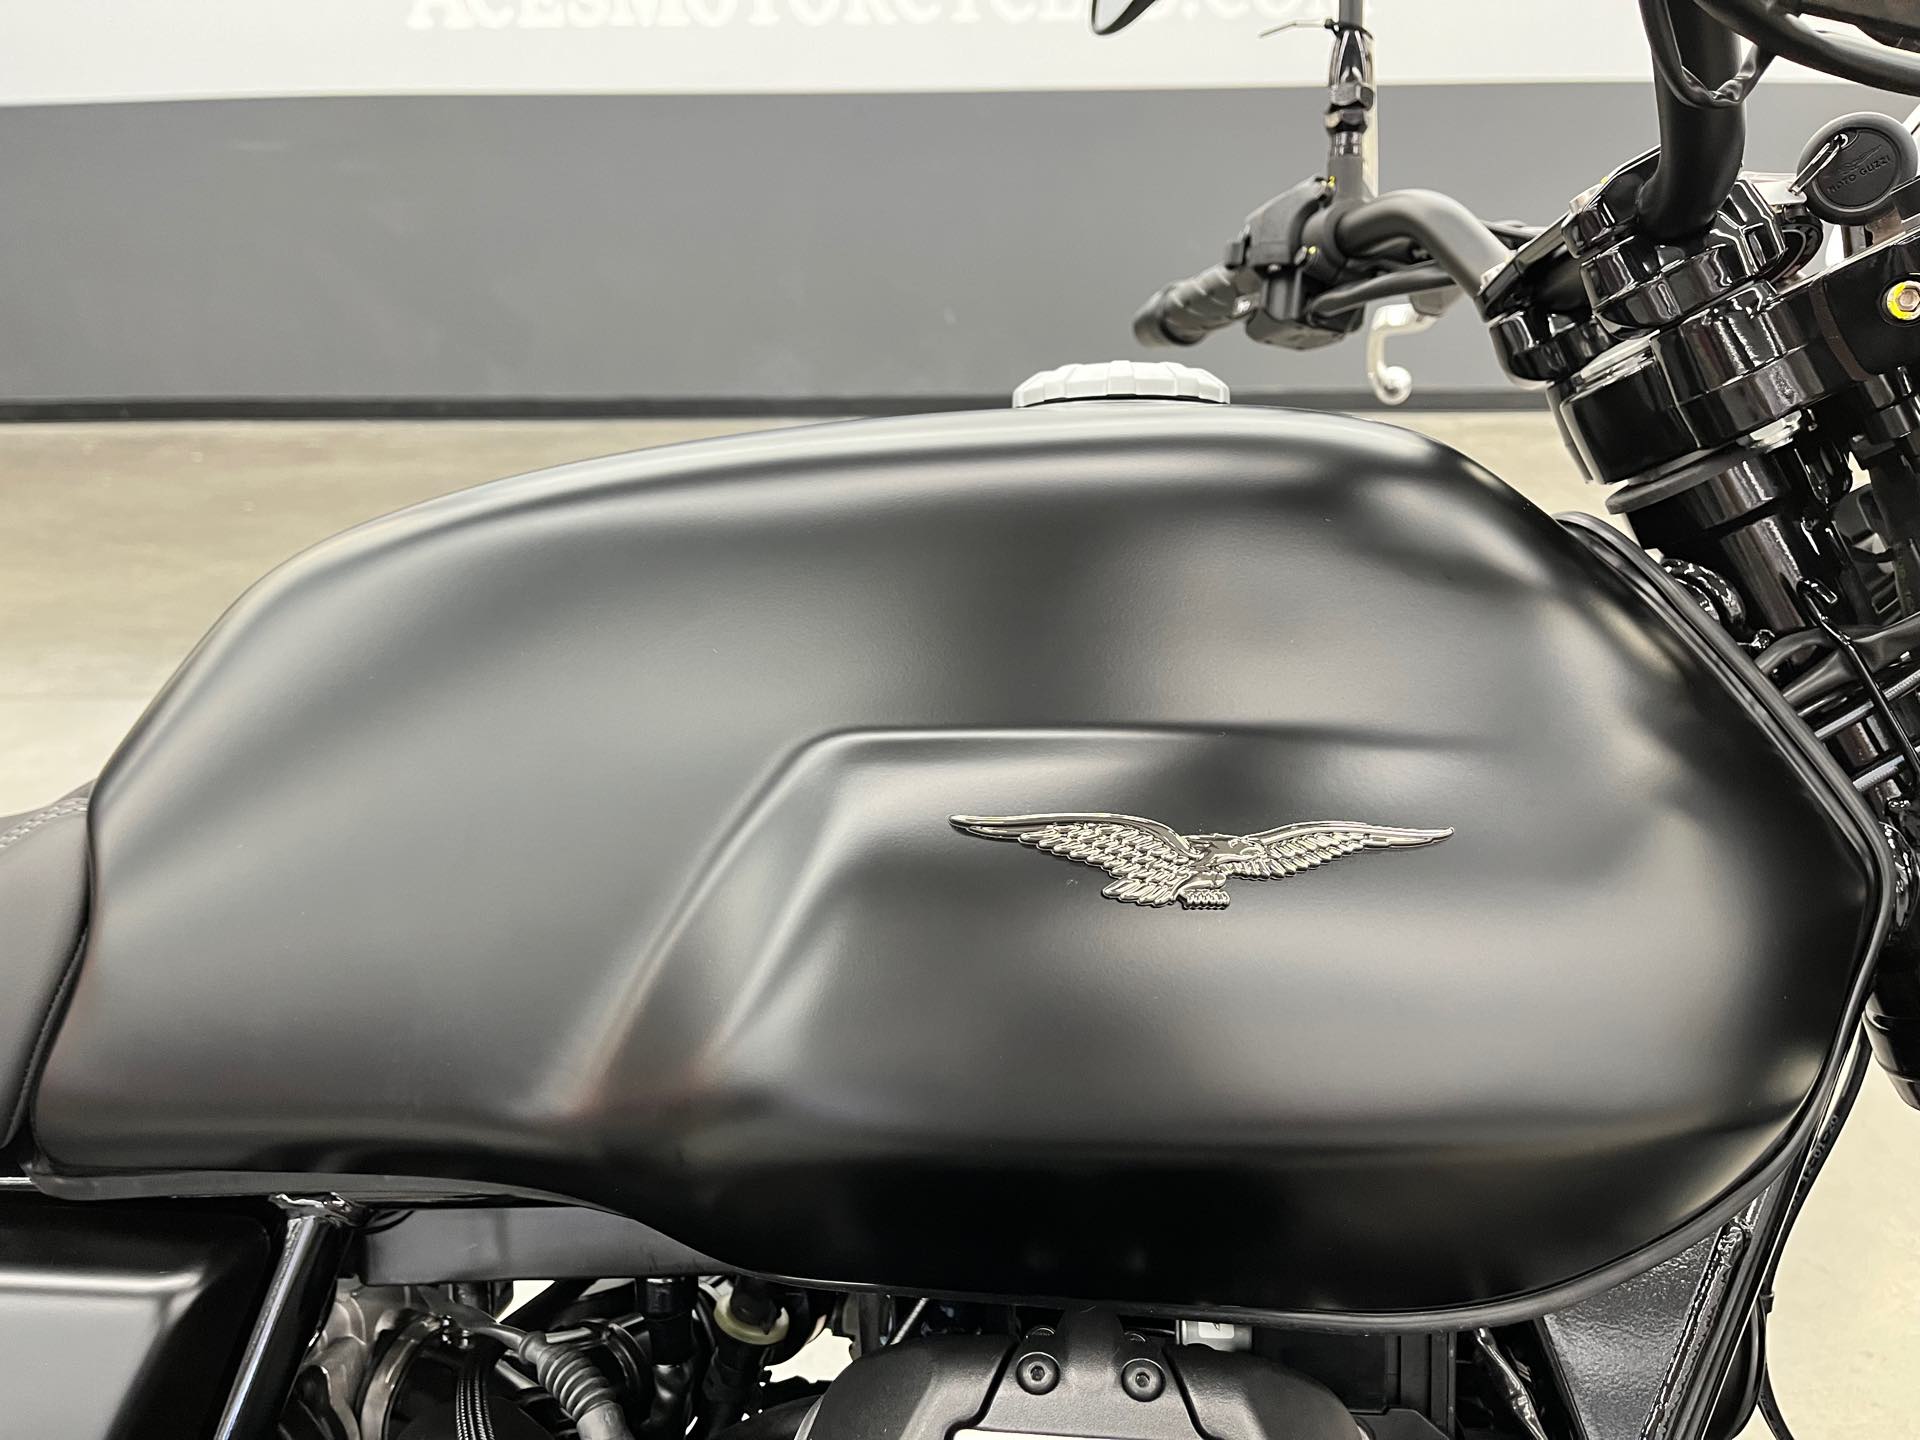 2022 Moto Guzzi V7 Special E5 at Aces Motorcycles - Denver